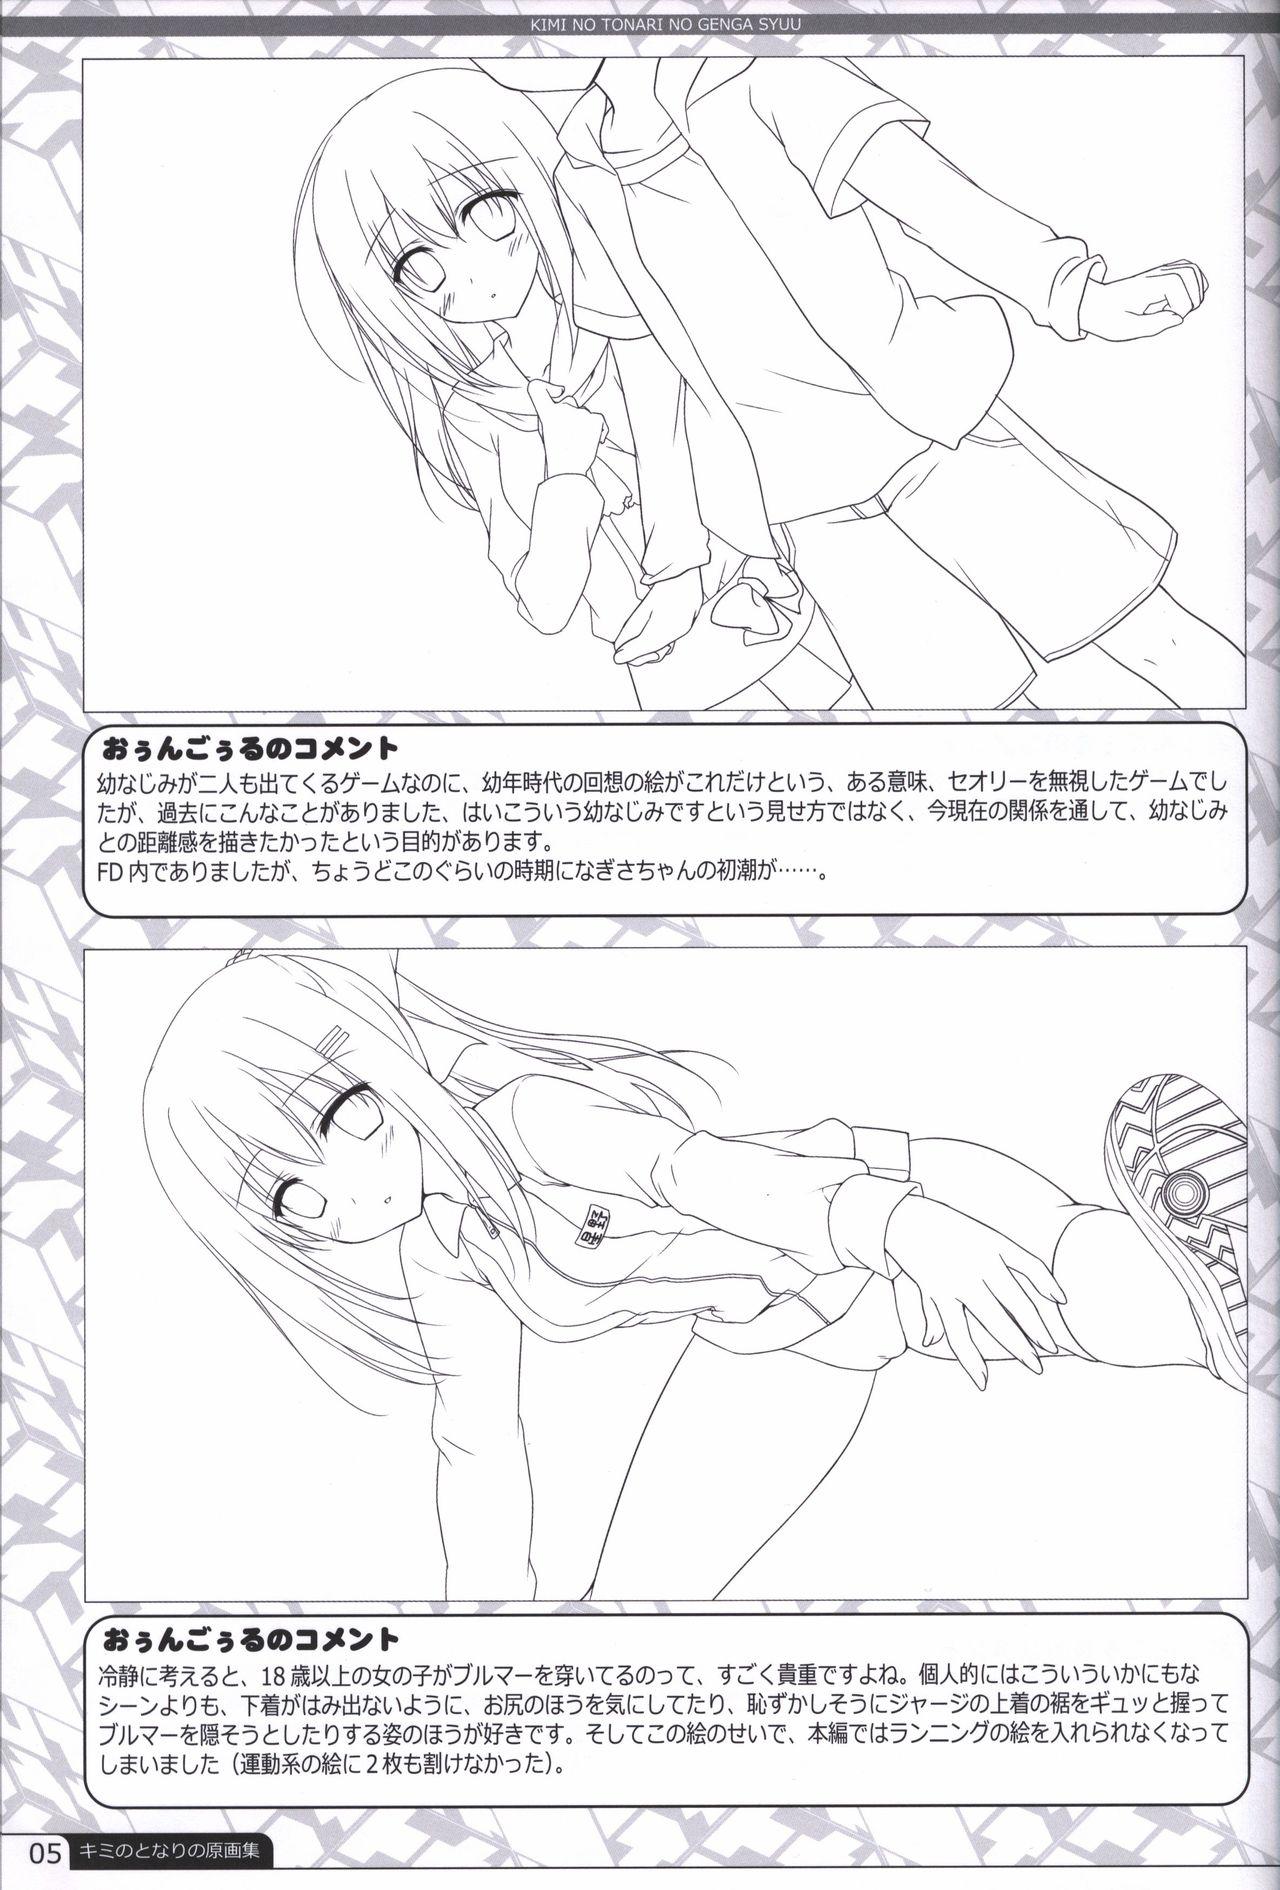 Gym Kimi no Tonari no illustration art book Casting - Page 4